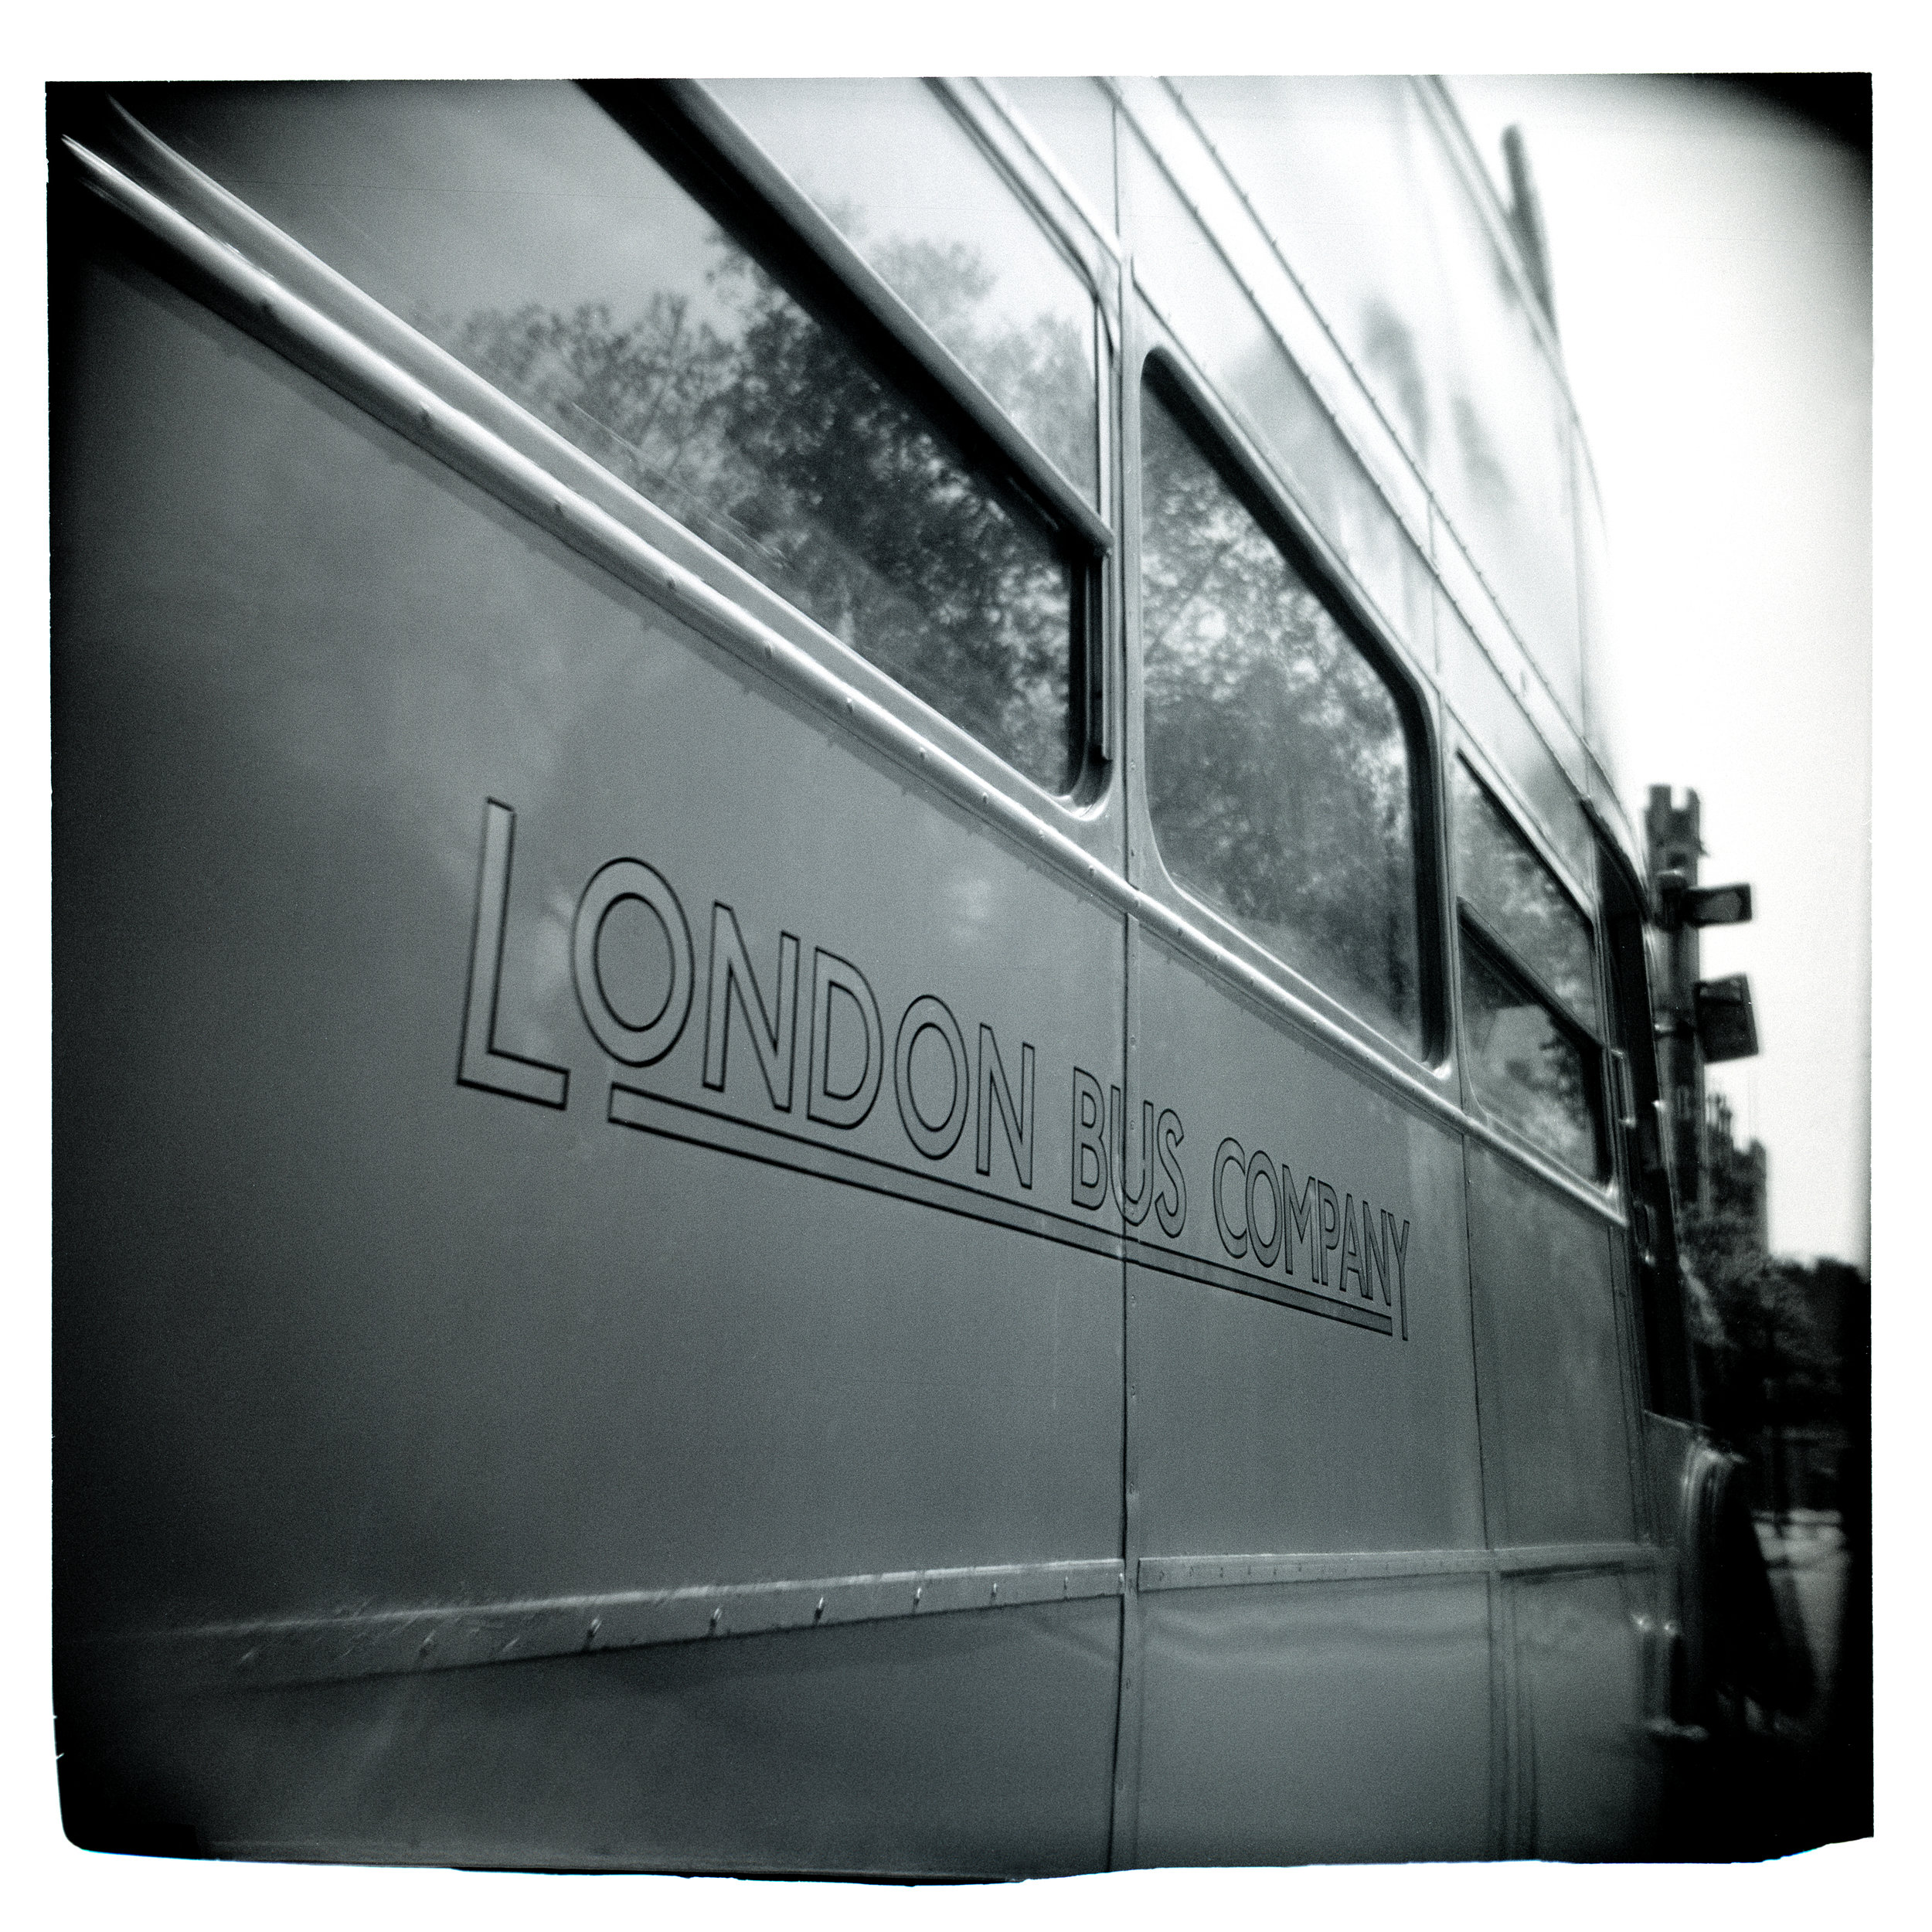 Londonbus.jpg